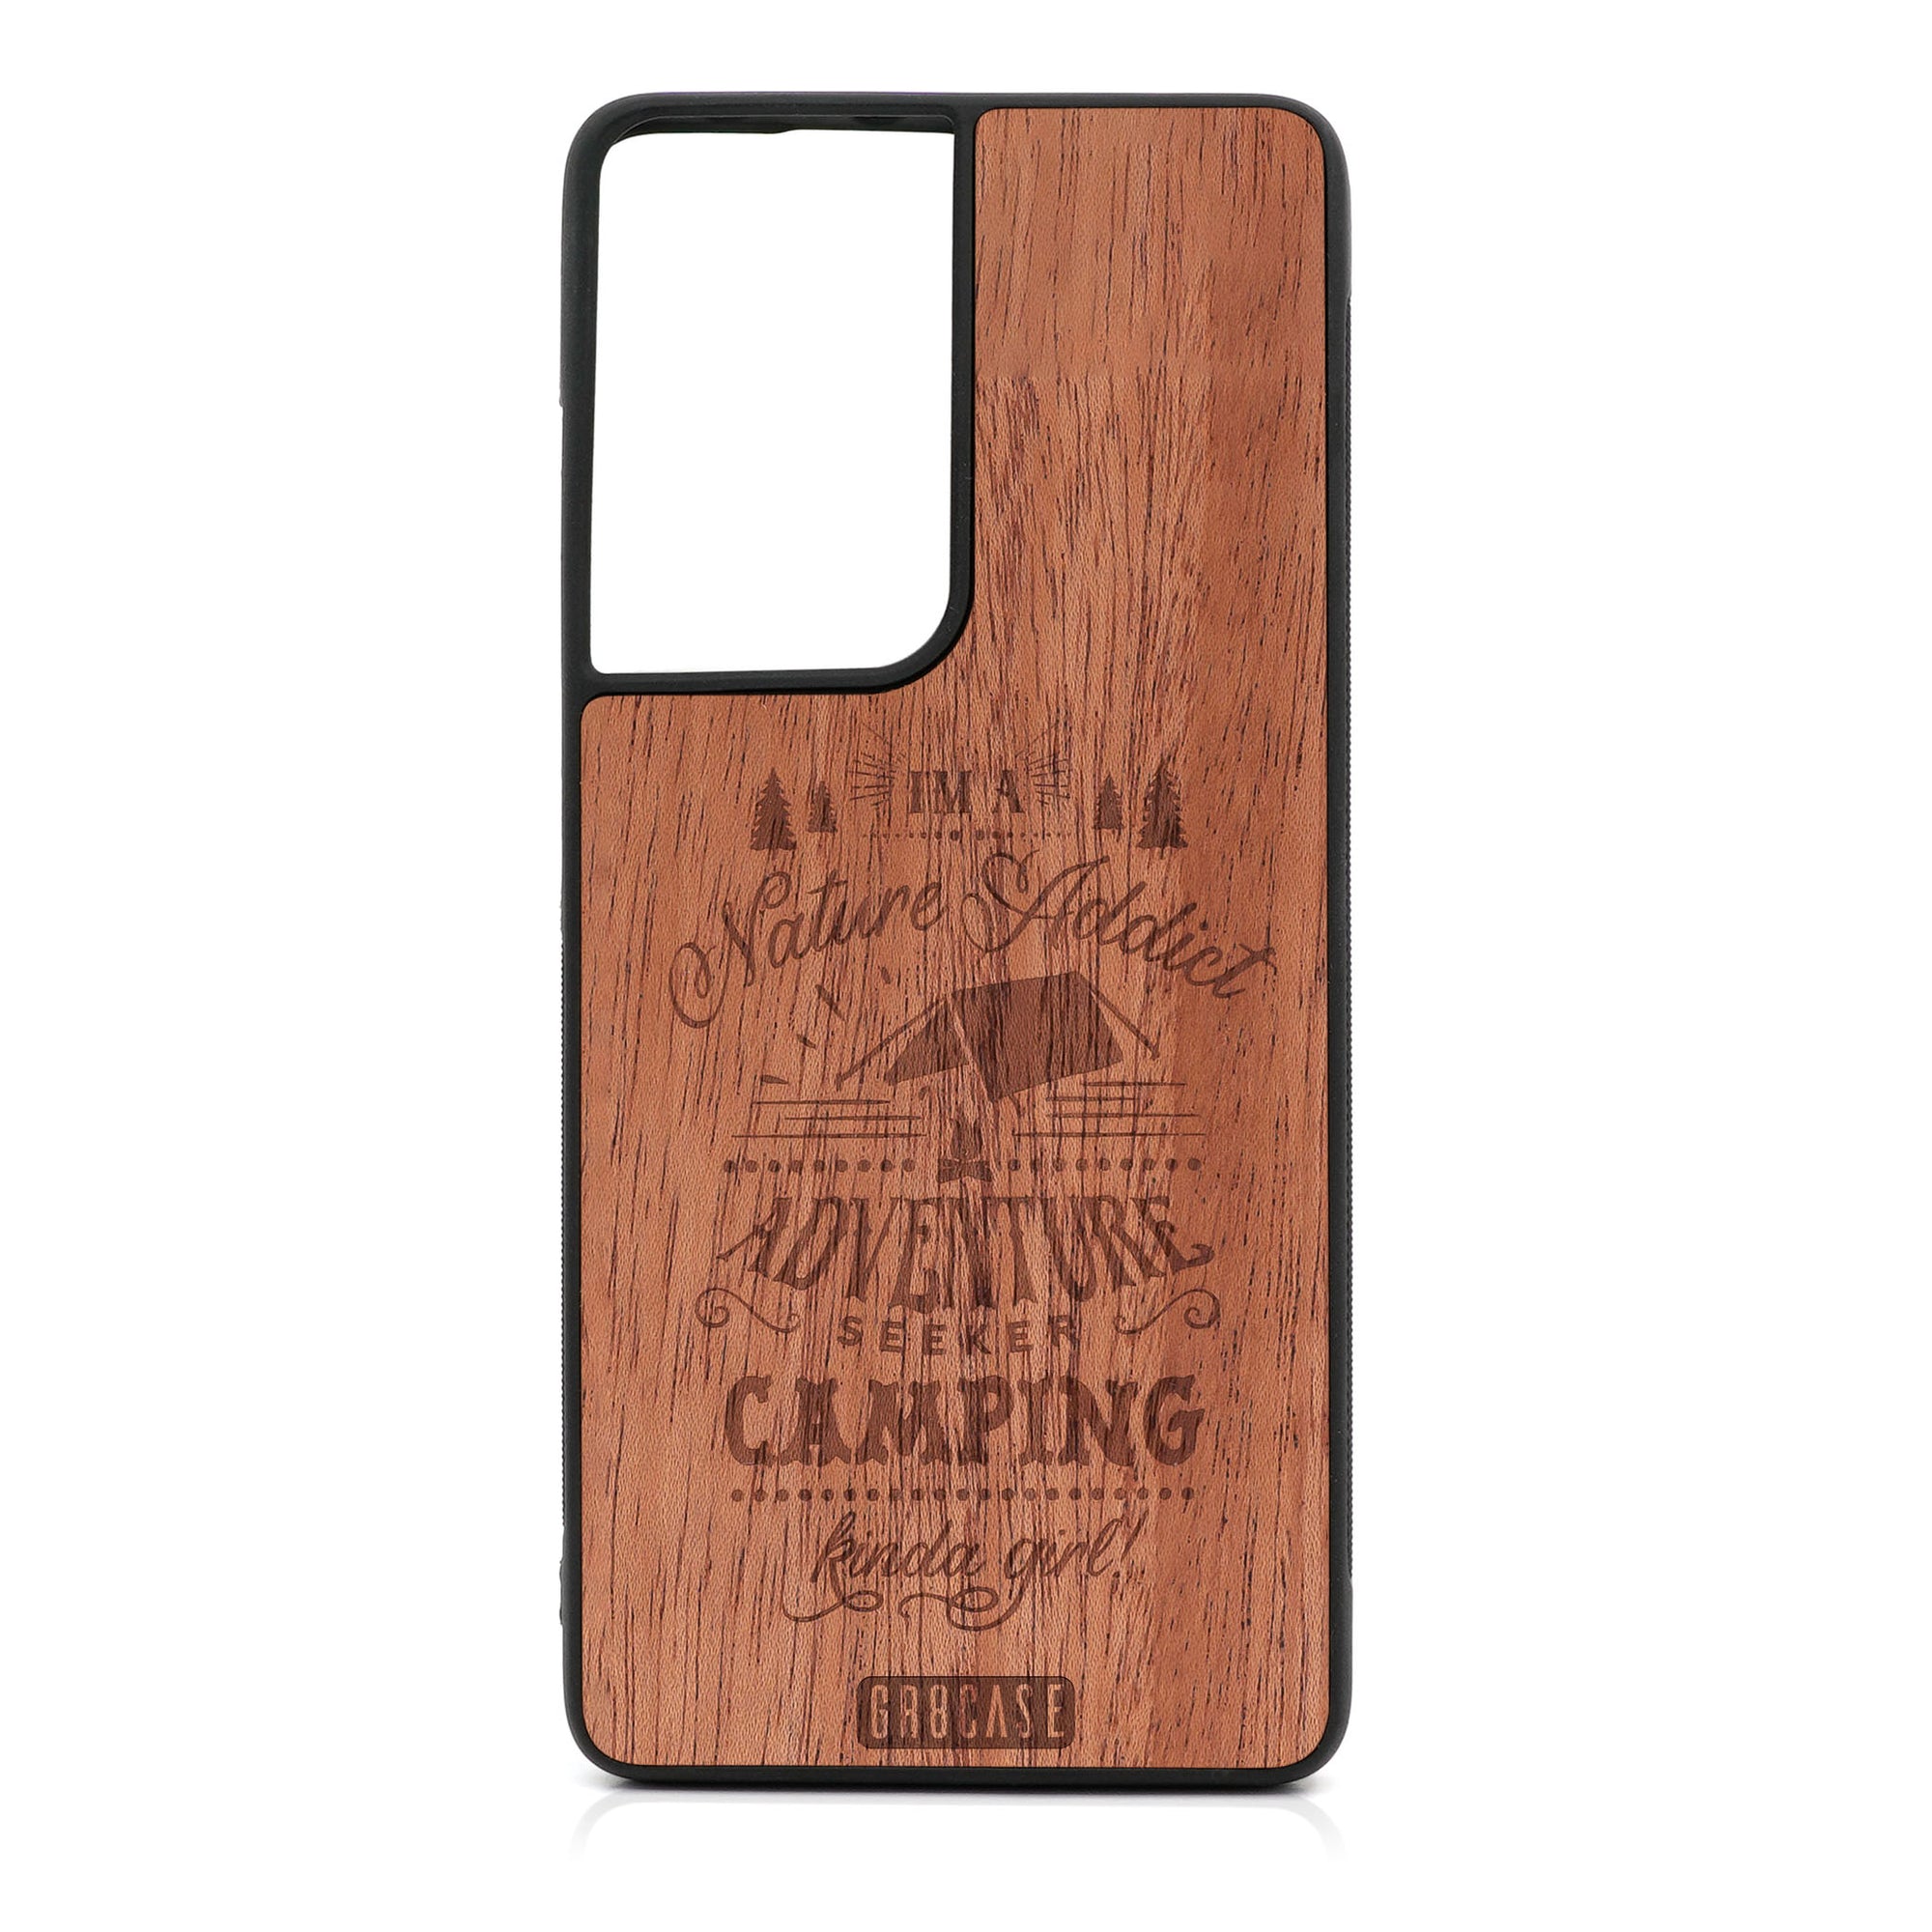 I'm A Nature Addict Adventure Seeker Camping Kinda Girl Design Wood Case For Samsung Galaxy S21 Ultra 5G